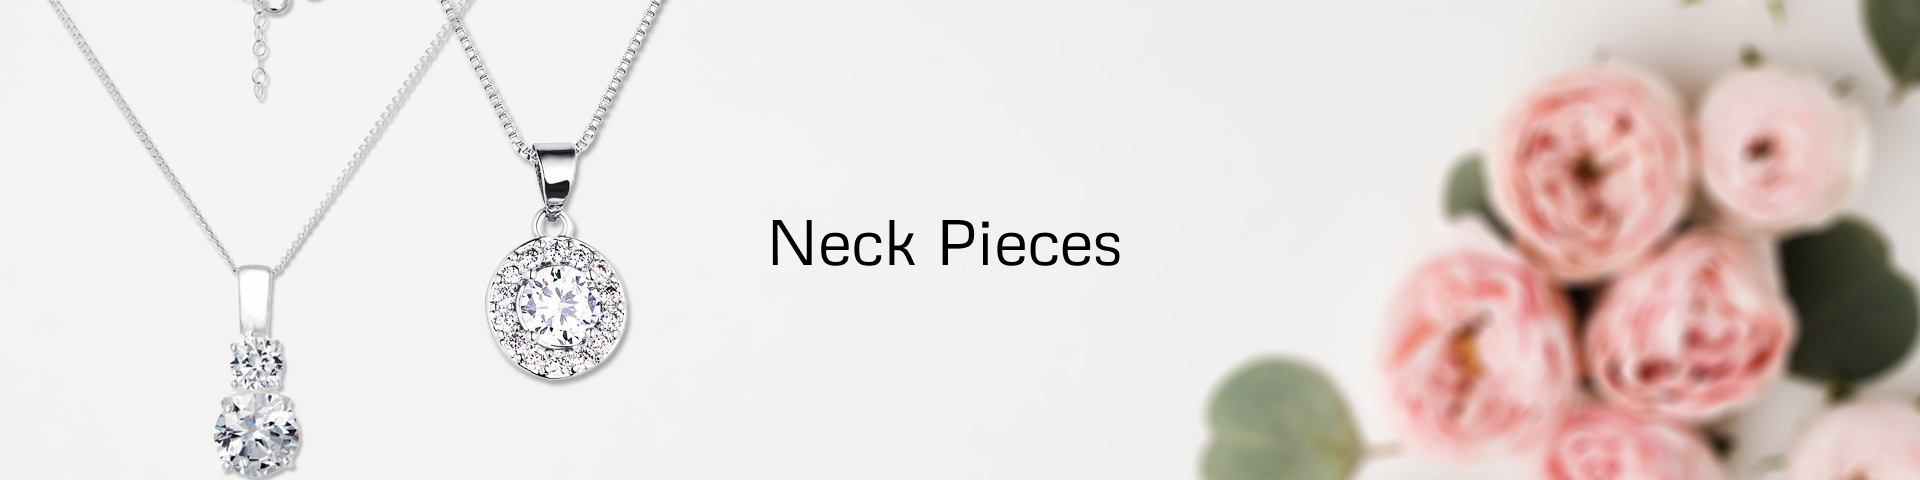 Neck Pieces